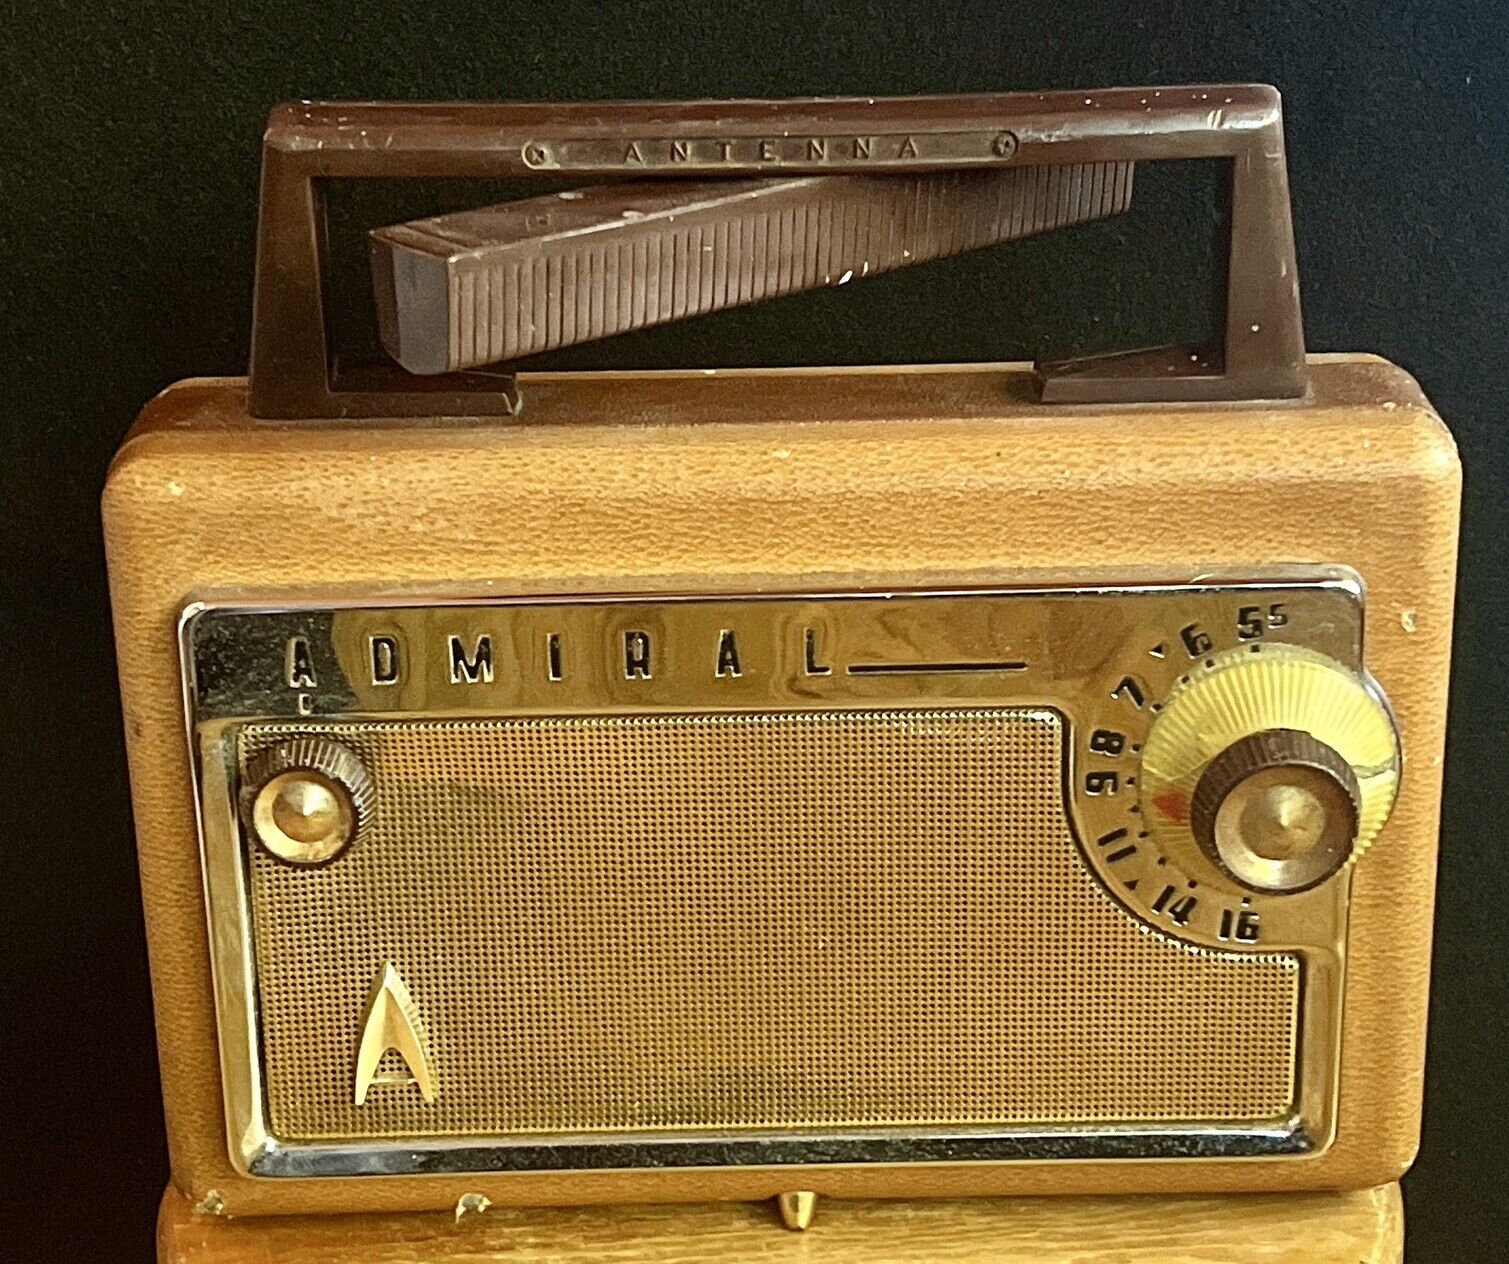 1957 Vintage Admiral Transistor Radio • Model 237 Portable Radio Does Not Work